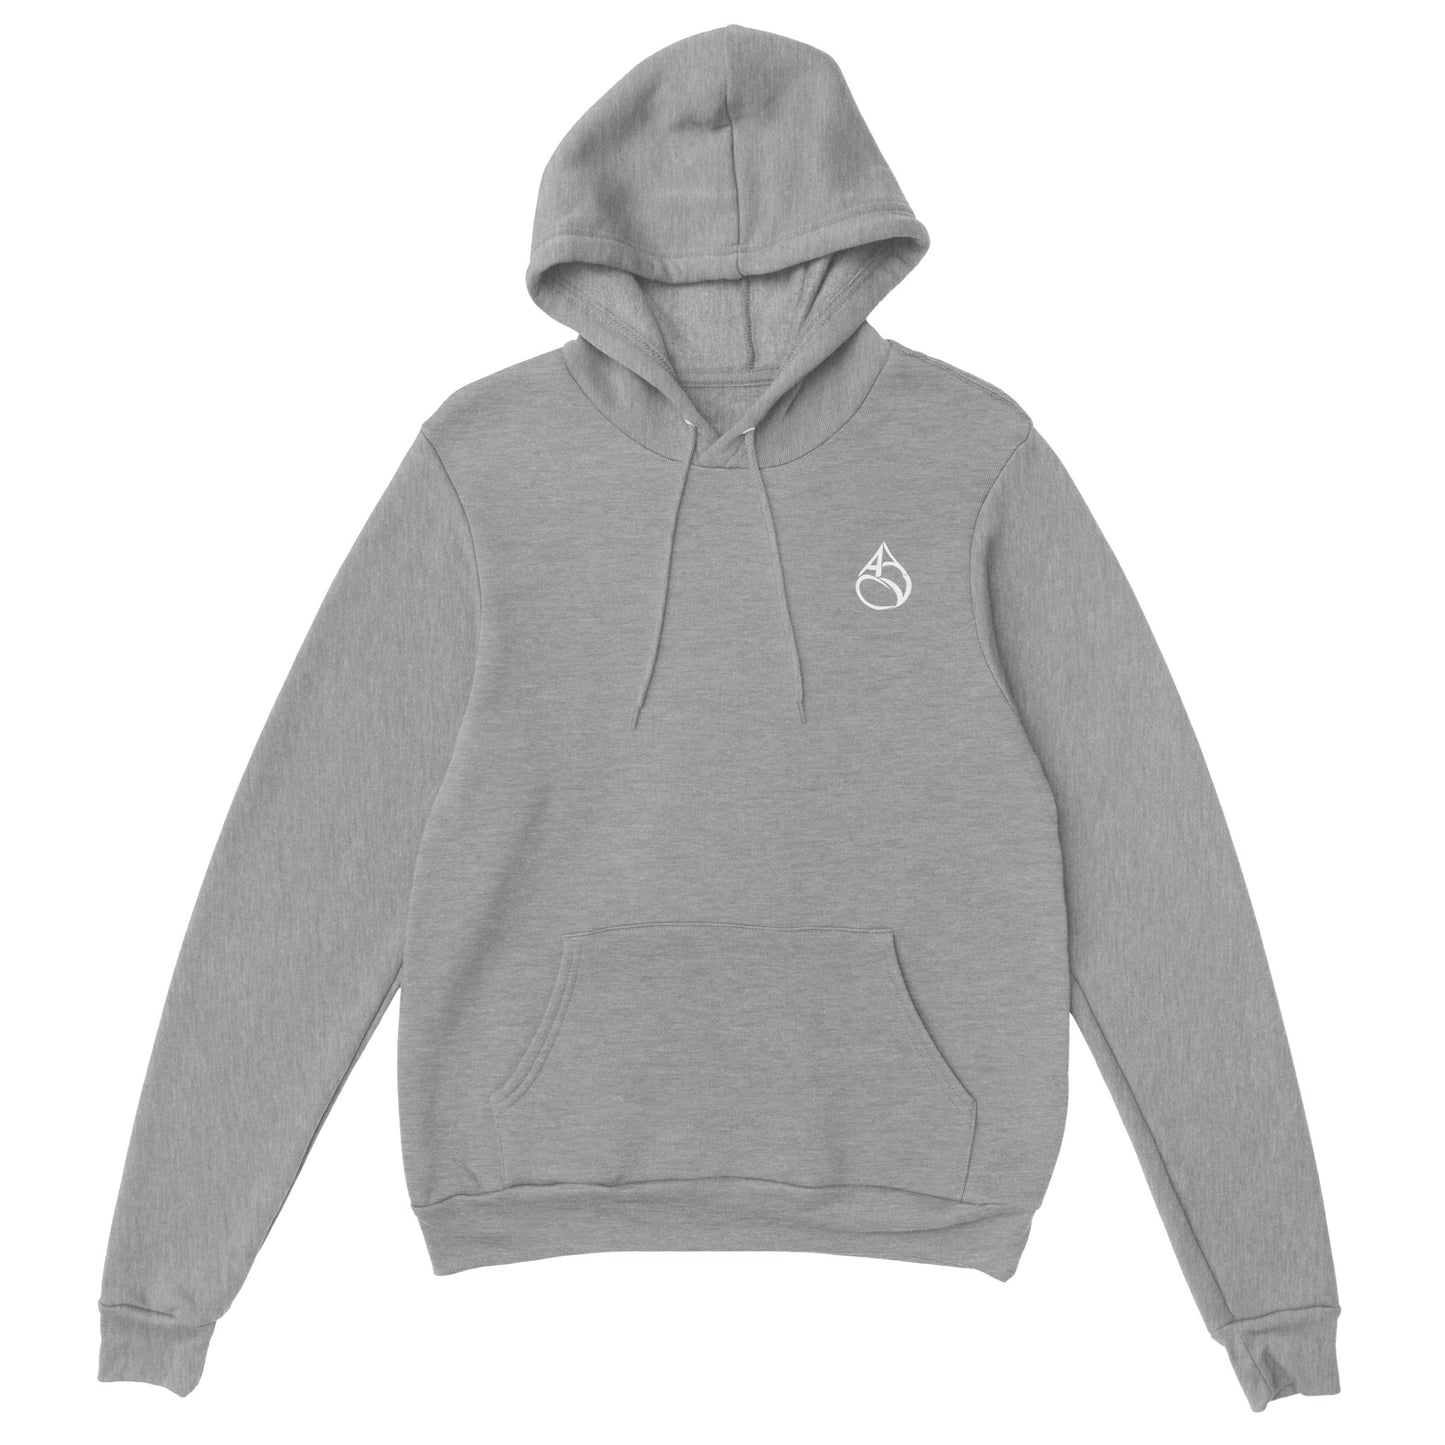 AYCV Premium unisex pullover hoodie - (white logo)